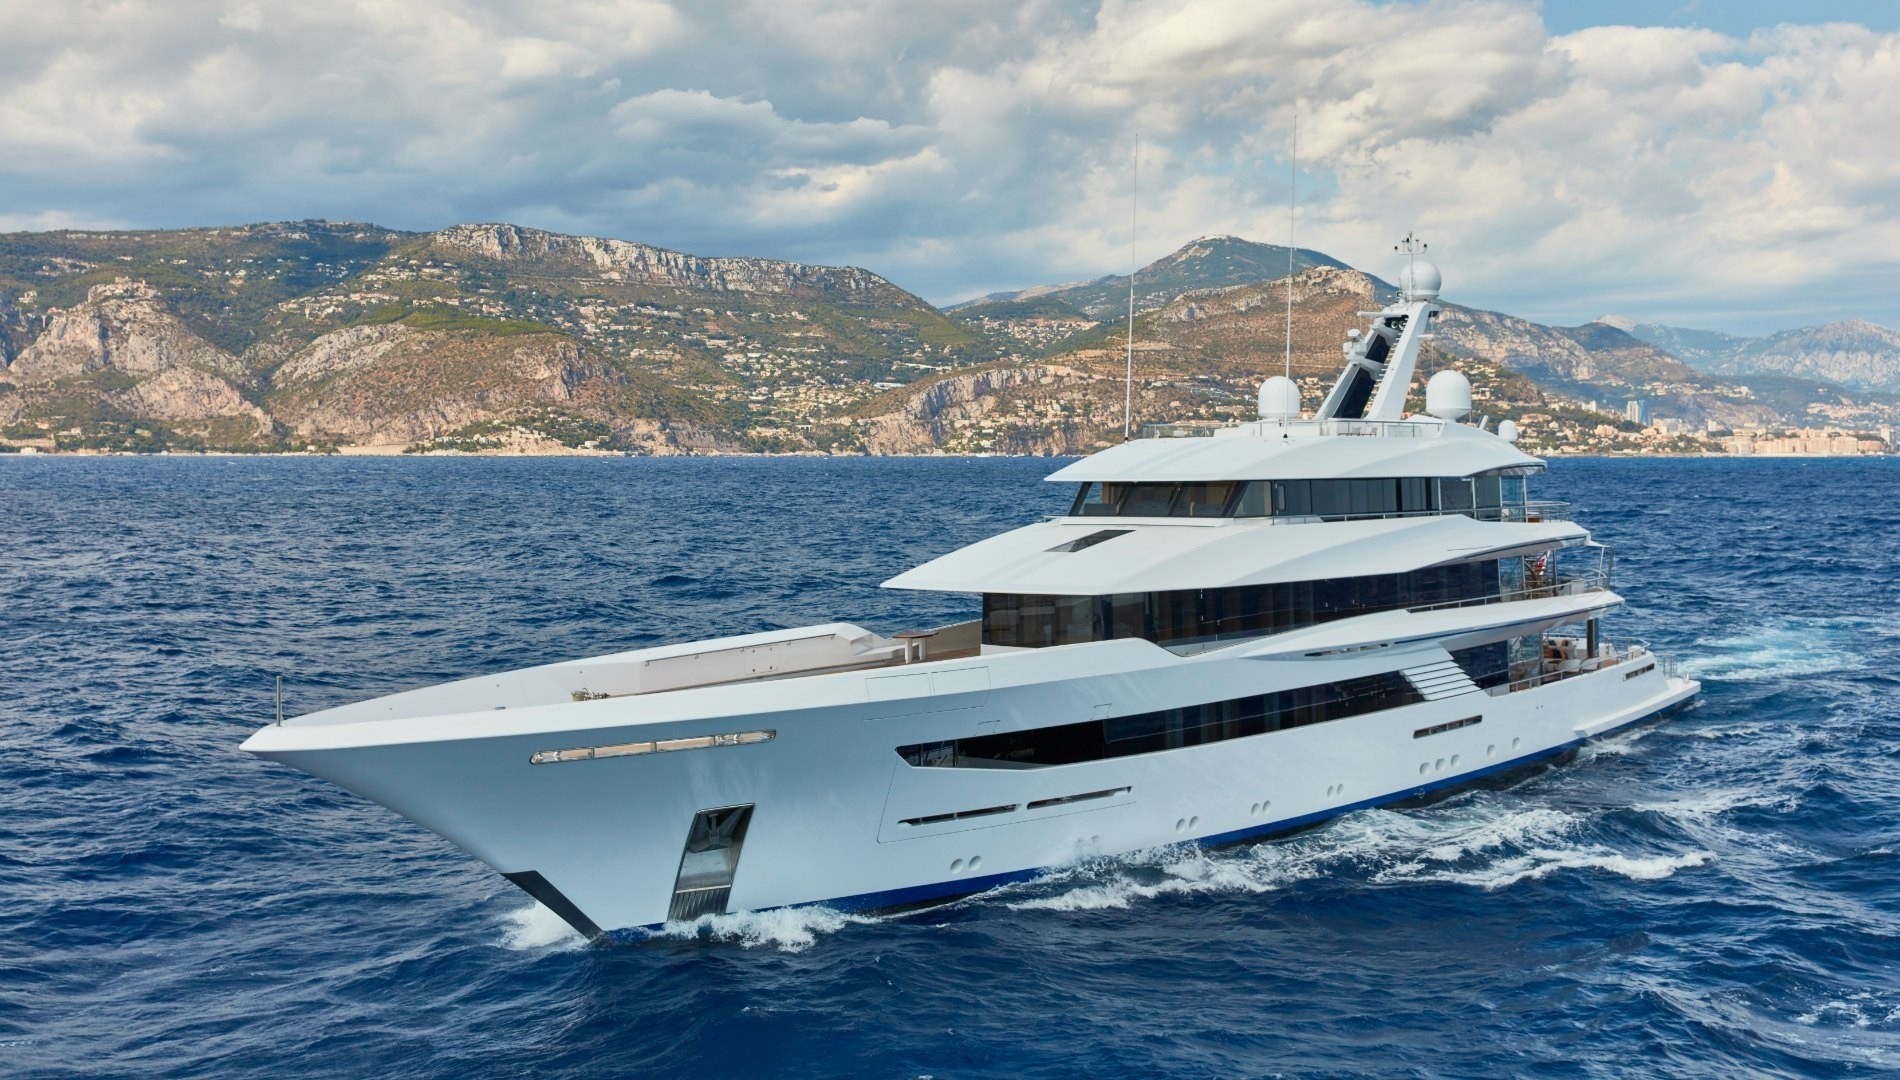 Spectacular 70m Feadship superyacht cruising in the Mediterranean